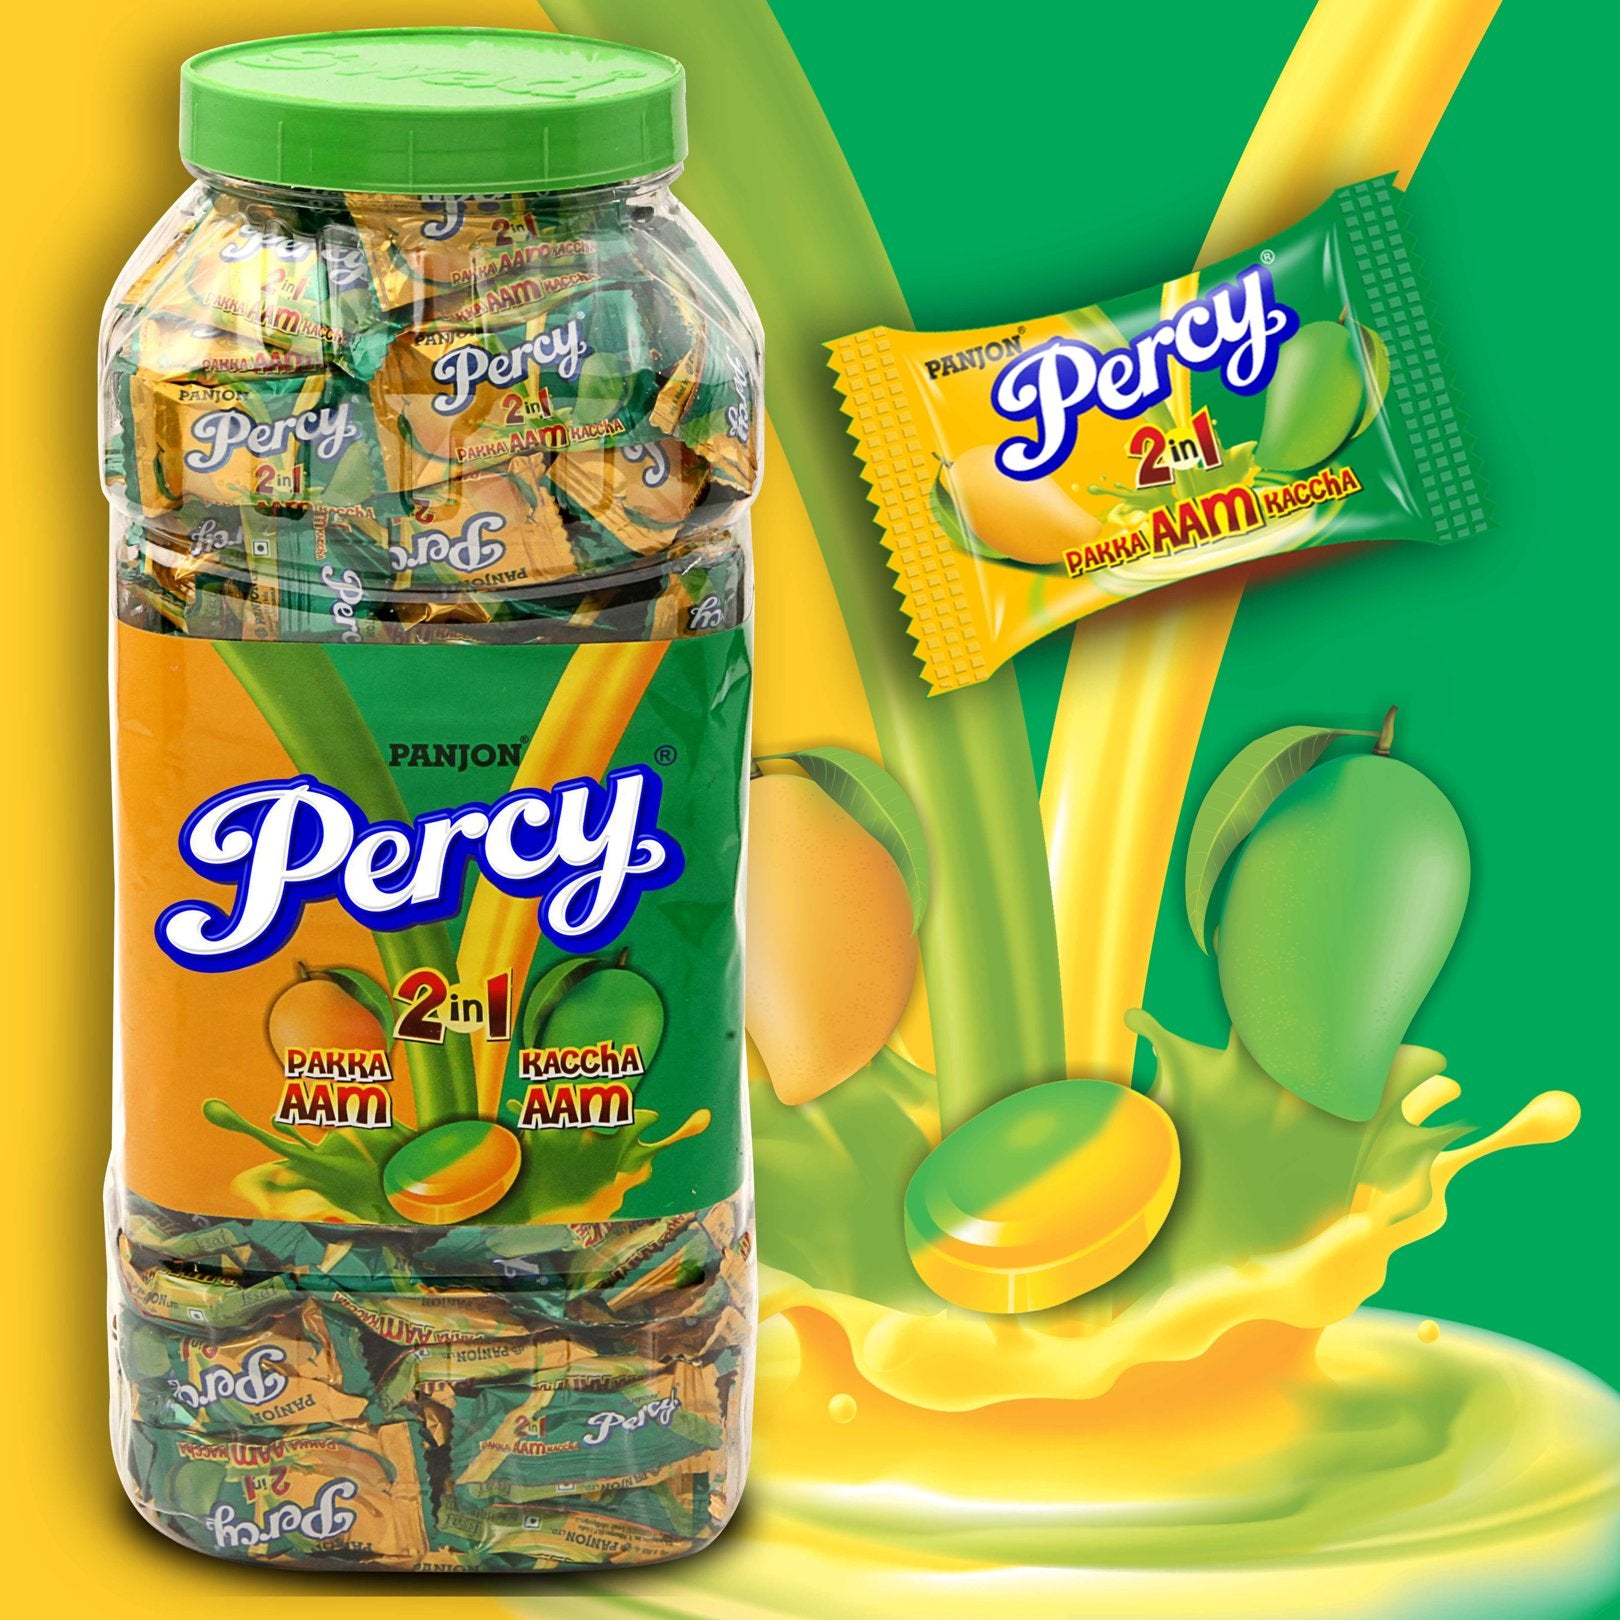 Percy 2 in 1 Kaccha Aam - Pakka Aam Candy Toffee Jar, 875g